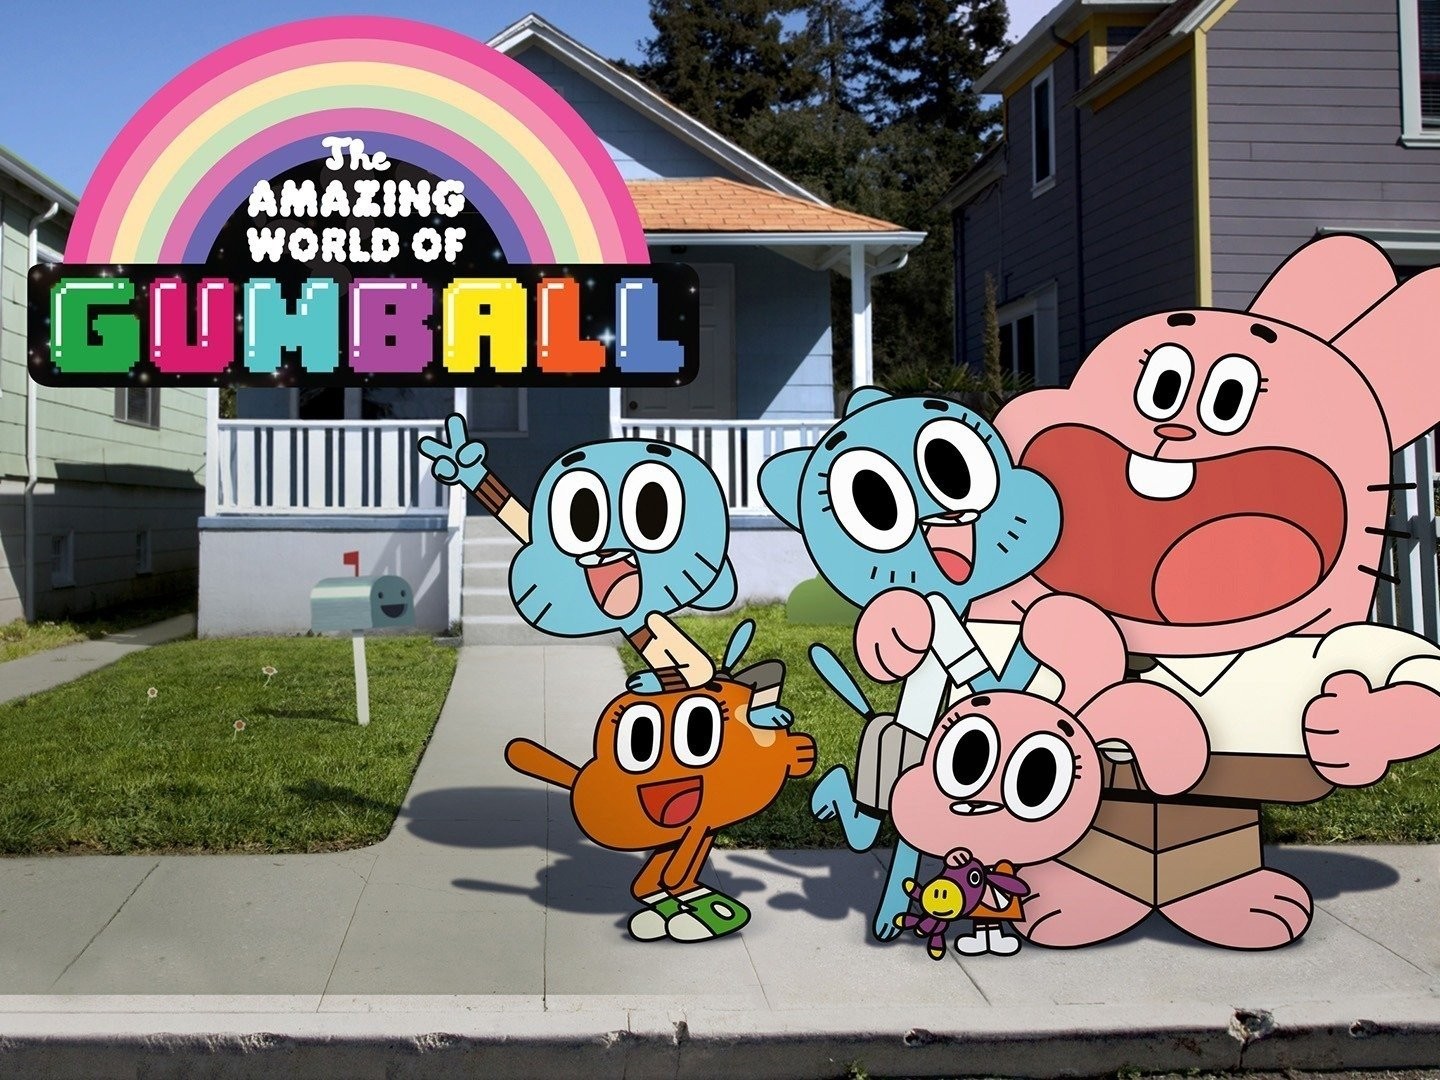 The Amazing World of Gumball (season 2) - Wikipedia